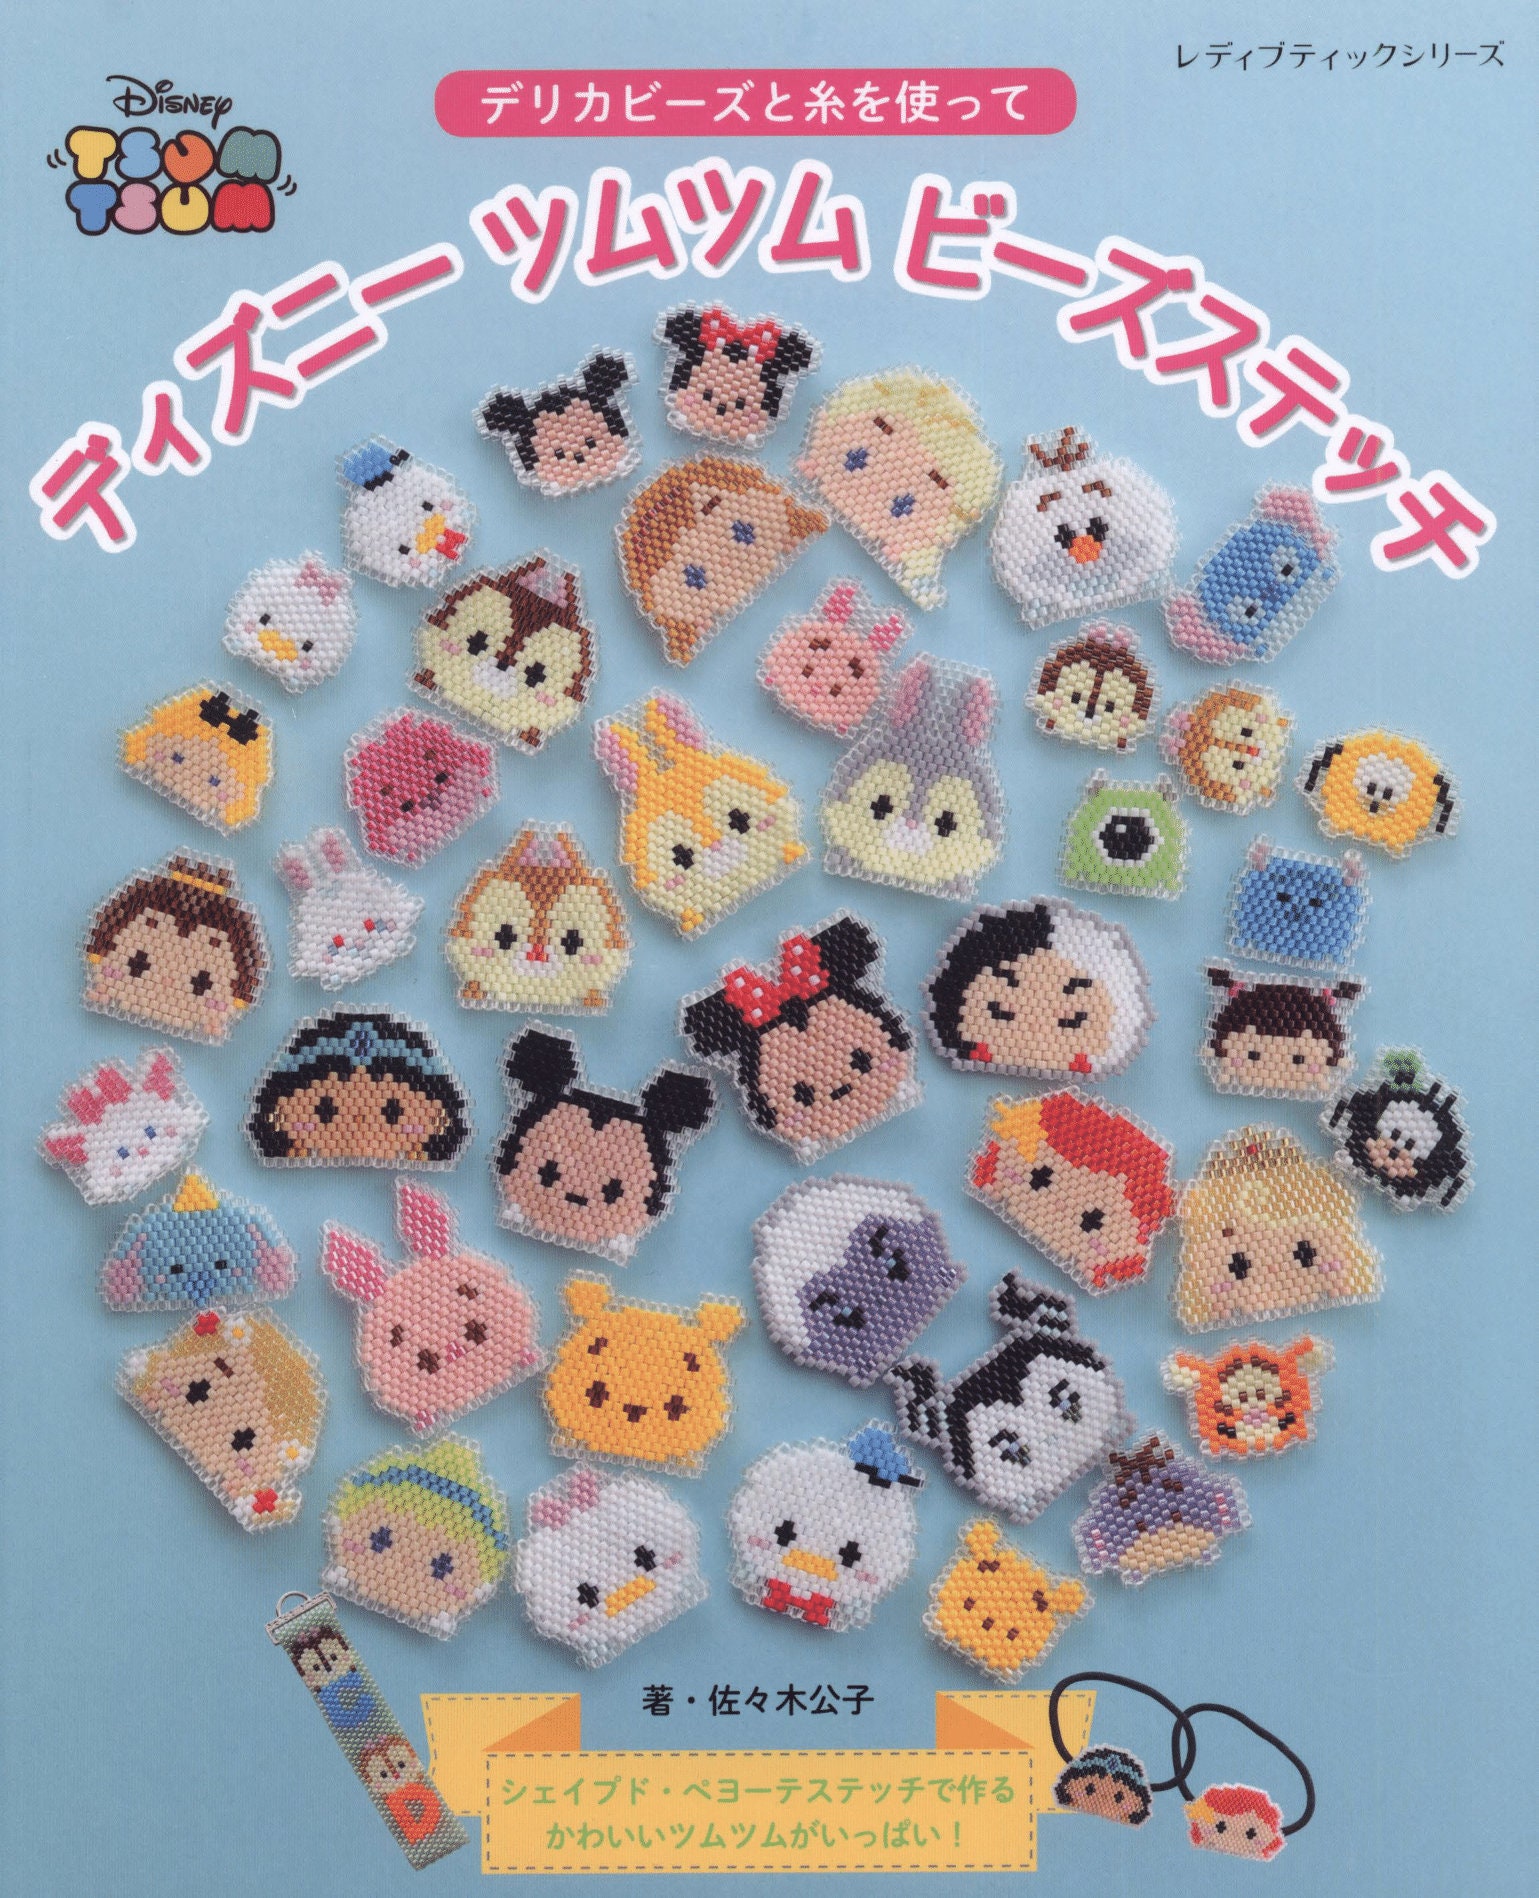 Disney Beads Motif Definitive Edition /Japanese Beads Craft Pattern Book